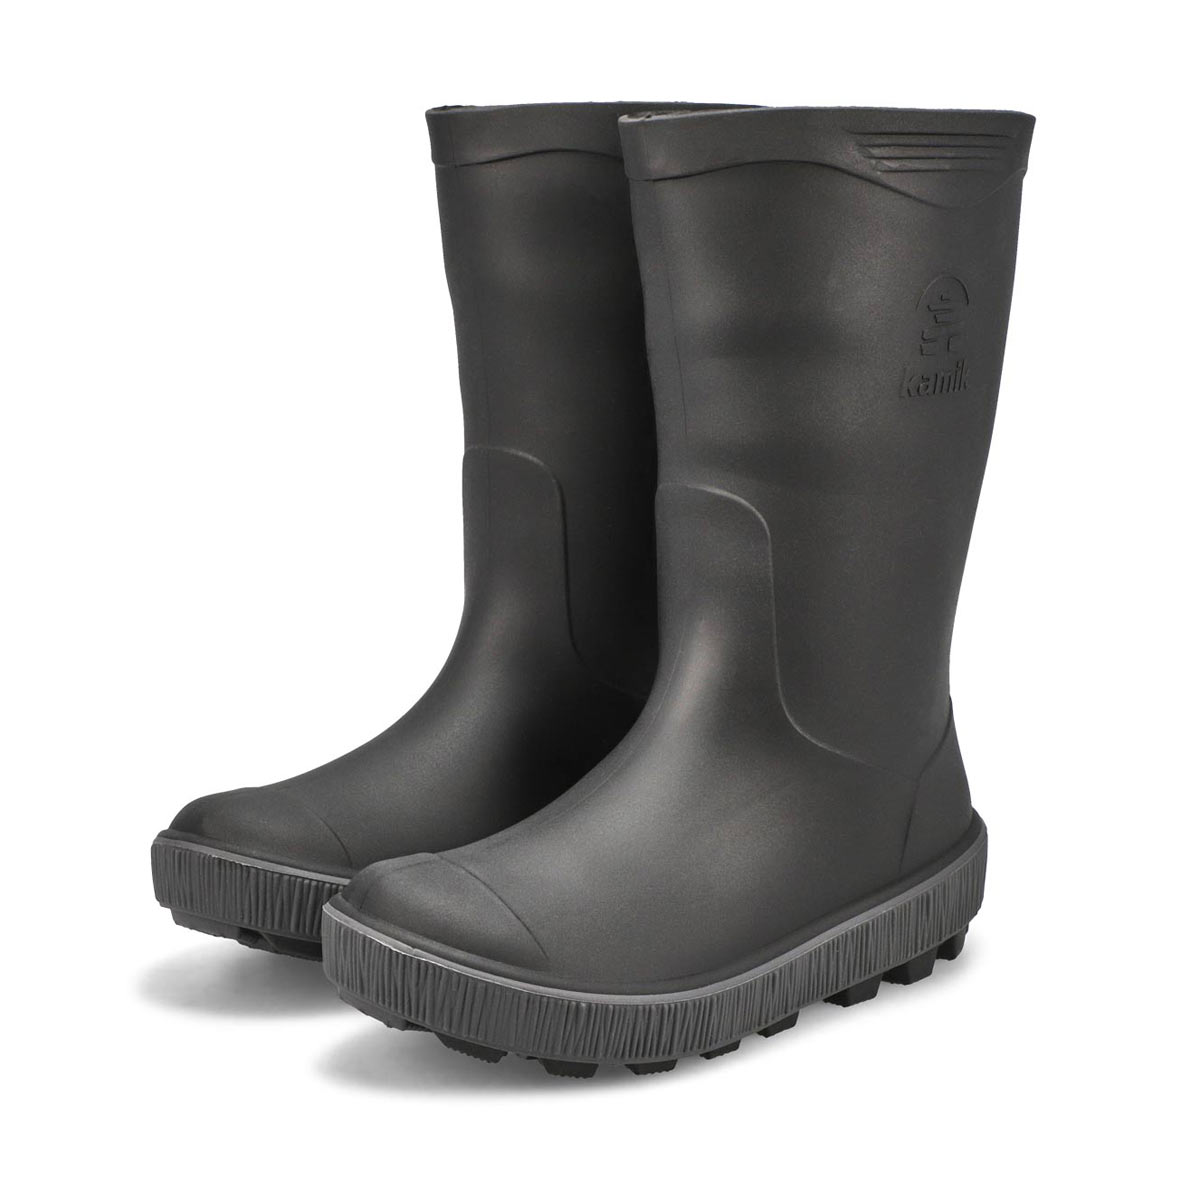 Boys' Riptide Waterproof Rain Boot - Blk/Charcoal